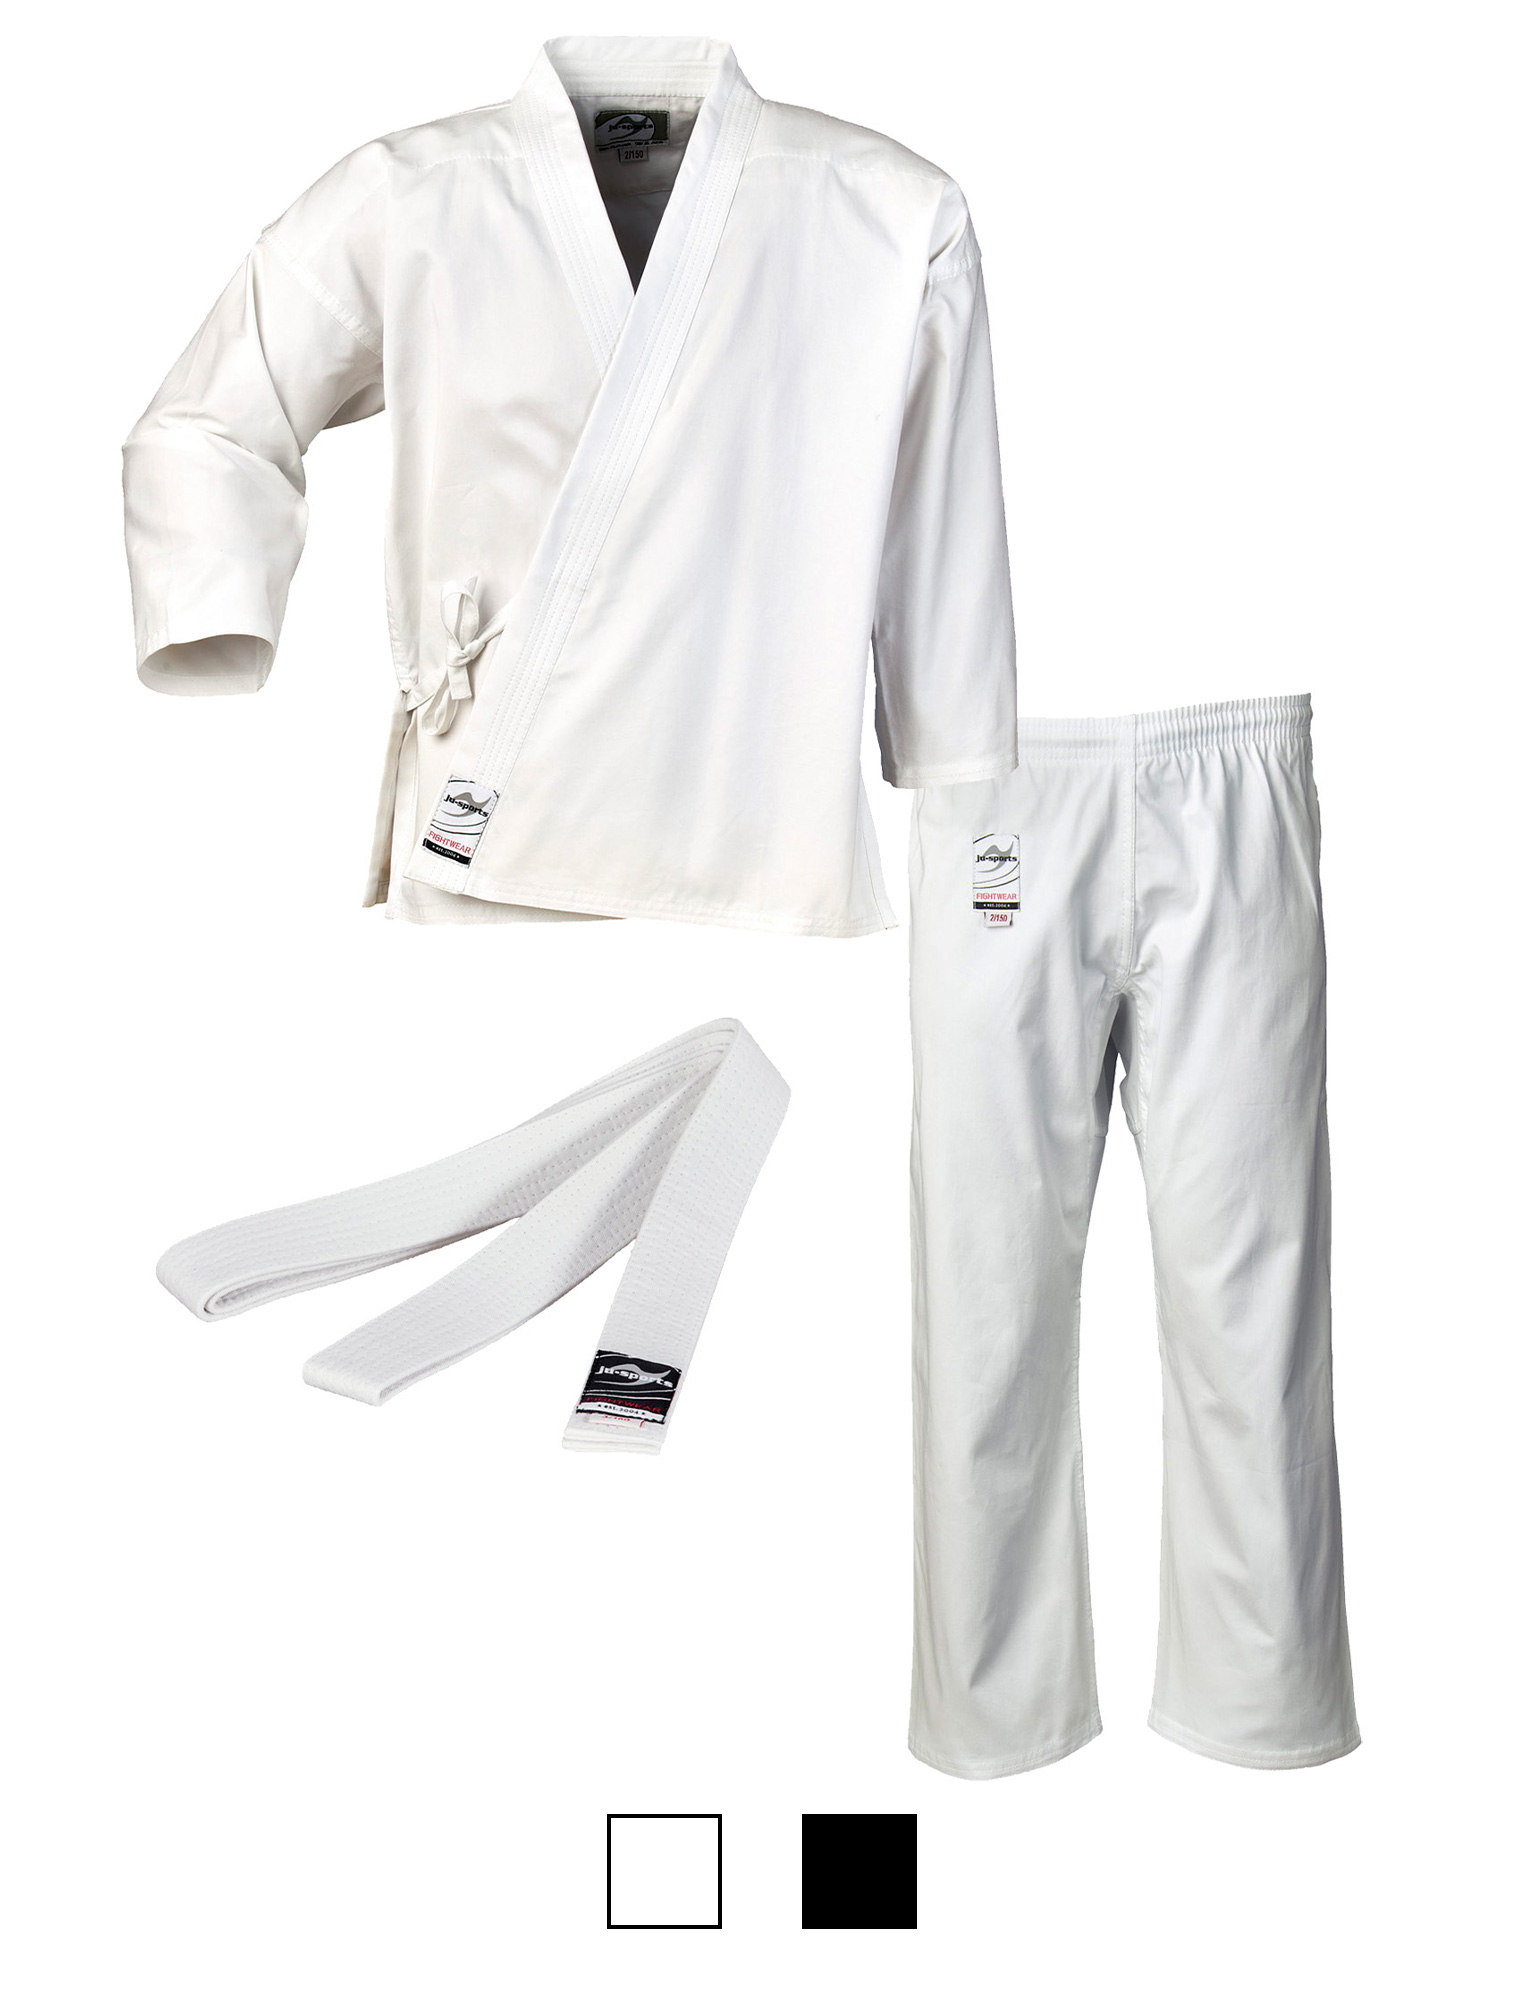 Ju-Sports Karate Gi "to start" white